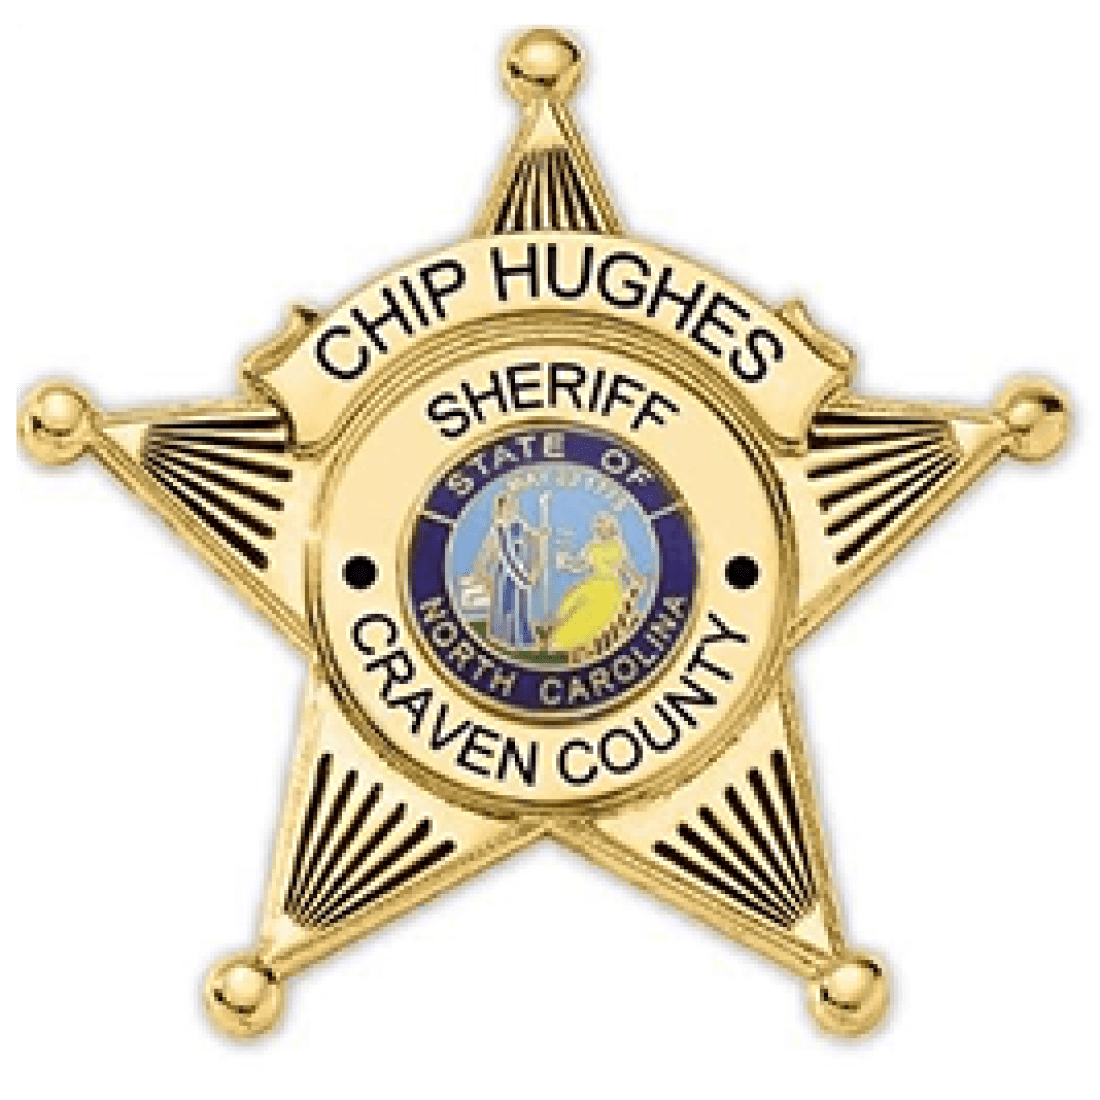 CFA sponsor Sheriff Chip Hughes text